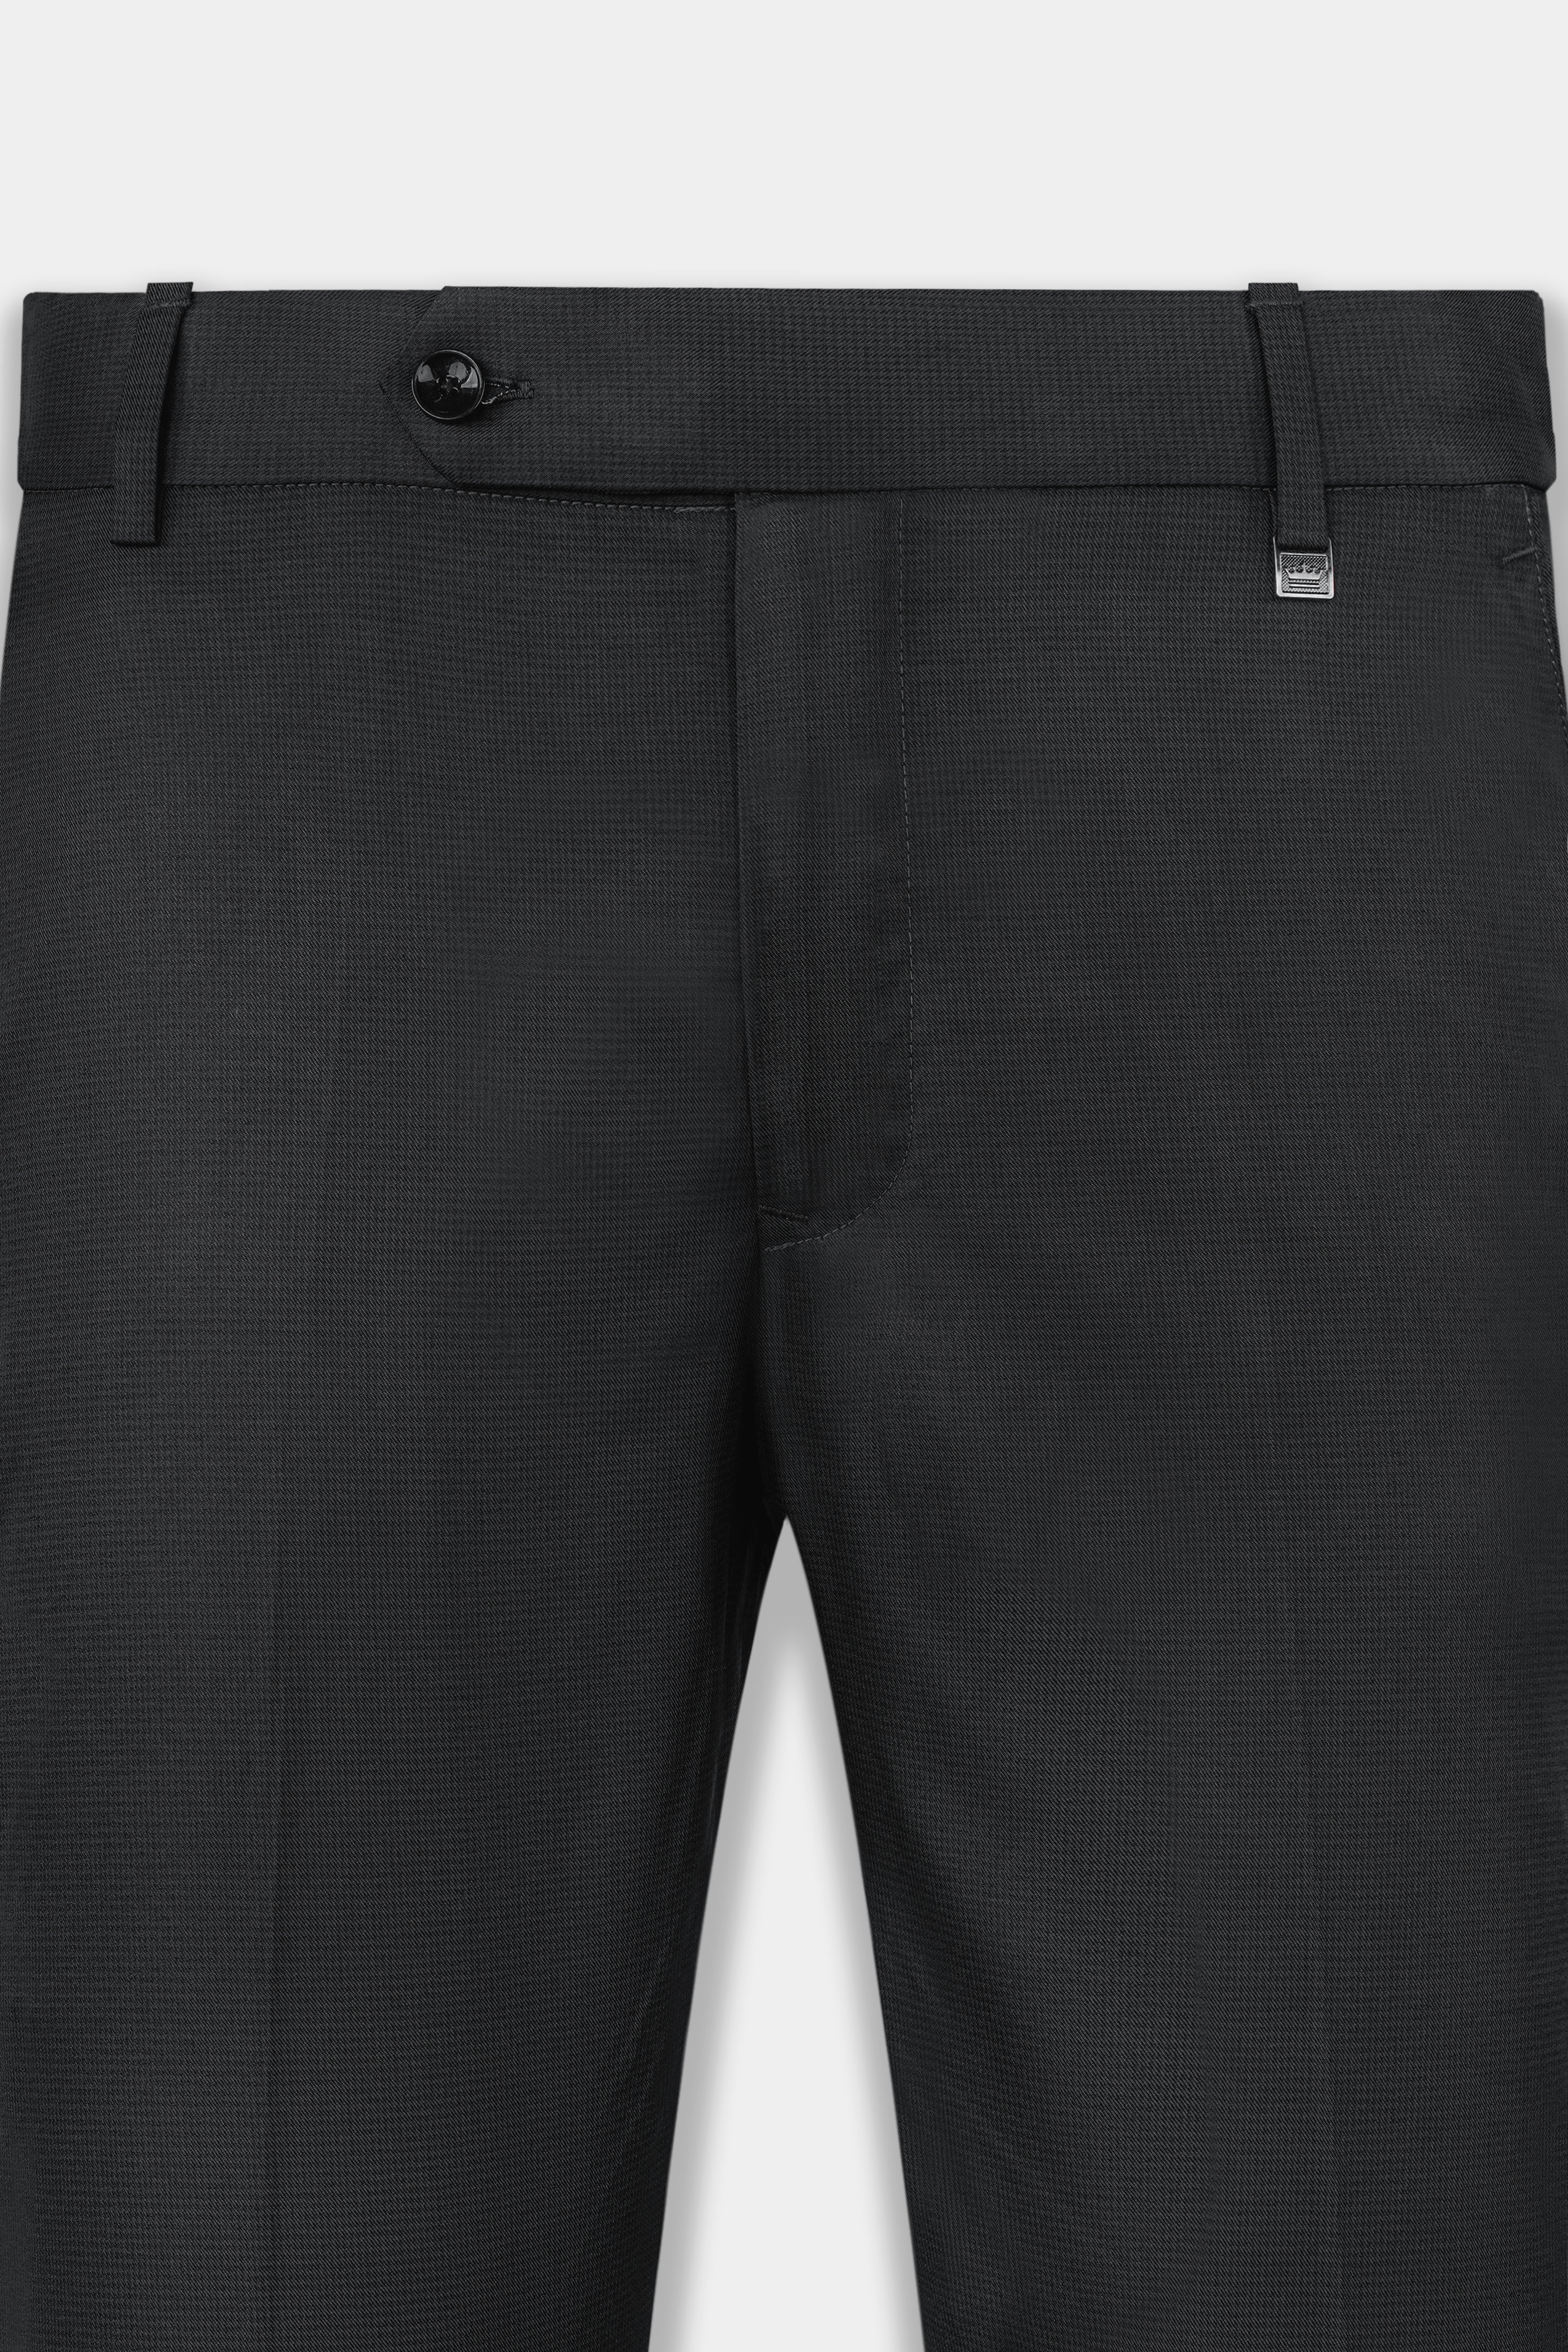 Montique Polyester Dress Pants Black Mens 42 x27 | eBay